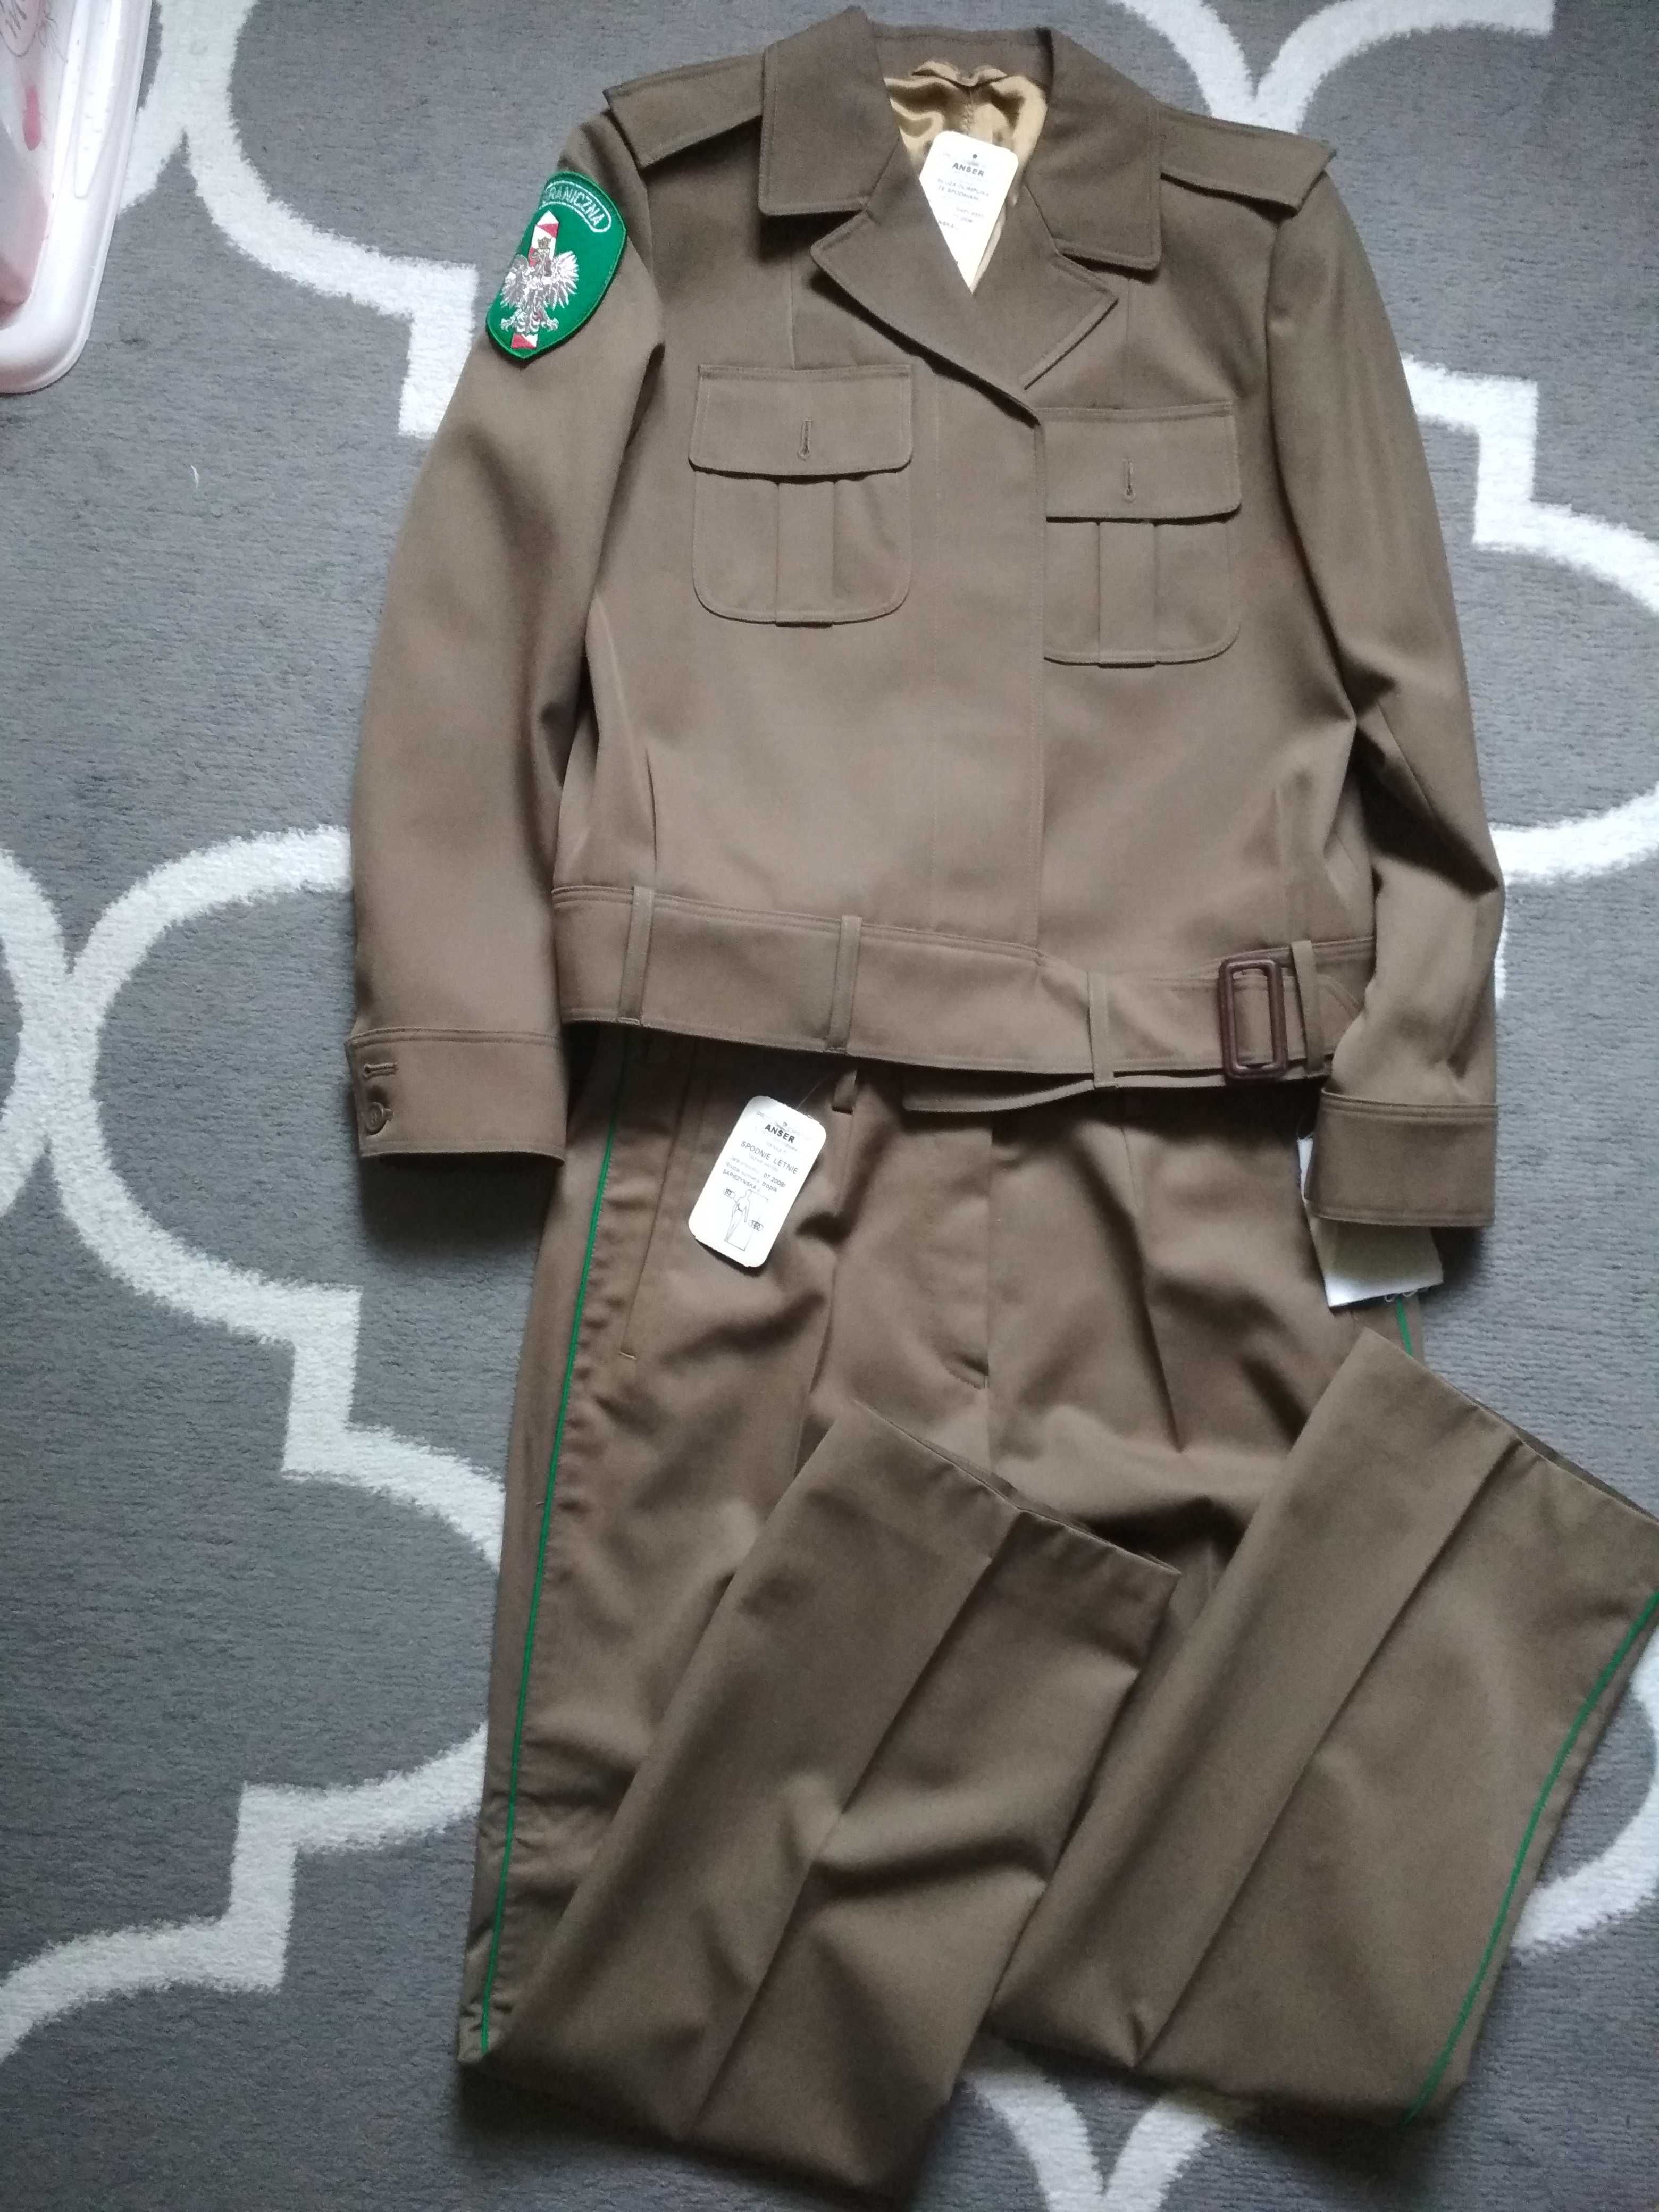 SG straż graniczna bluza olimpijka i spodnie mundur komplet nowy emble